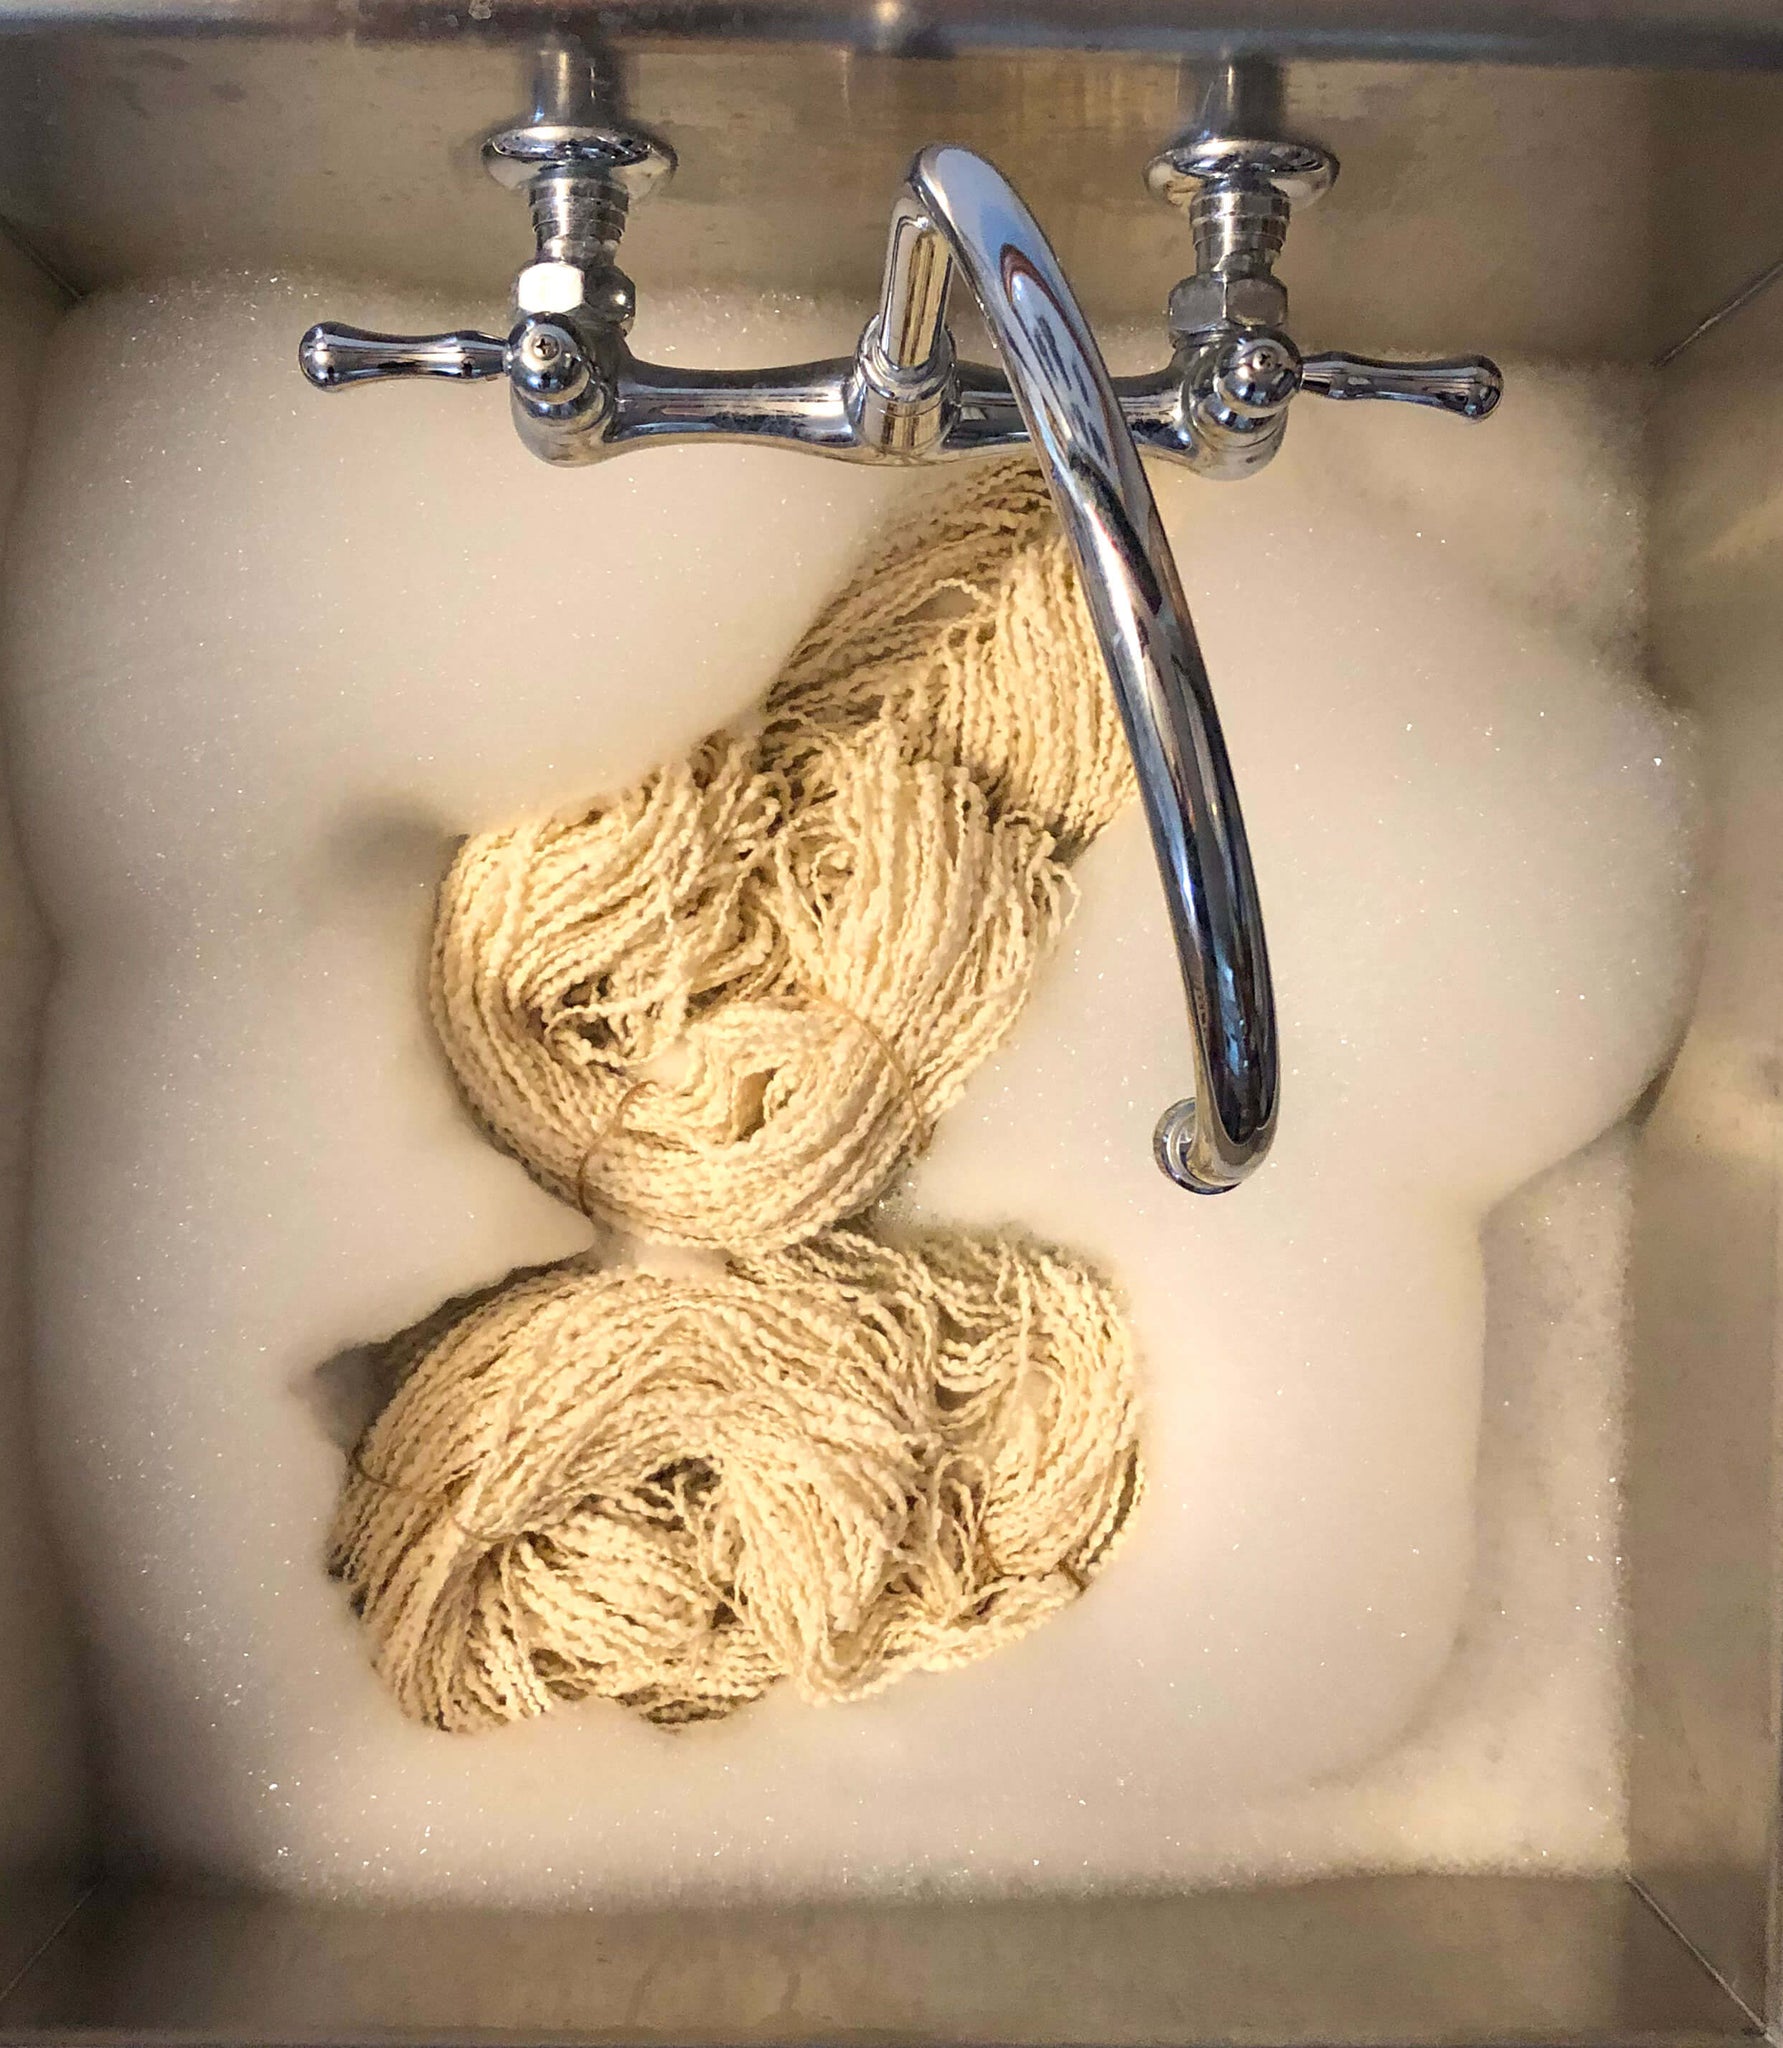 Scouring wool in a sink